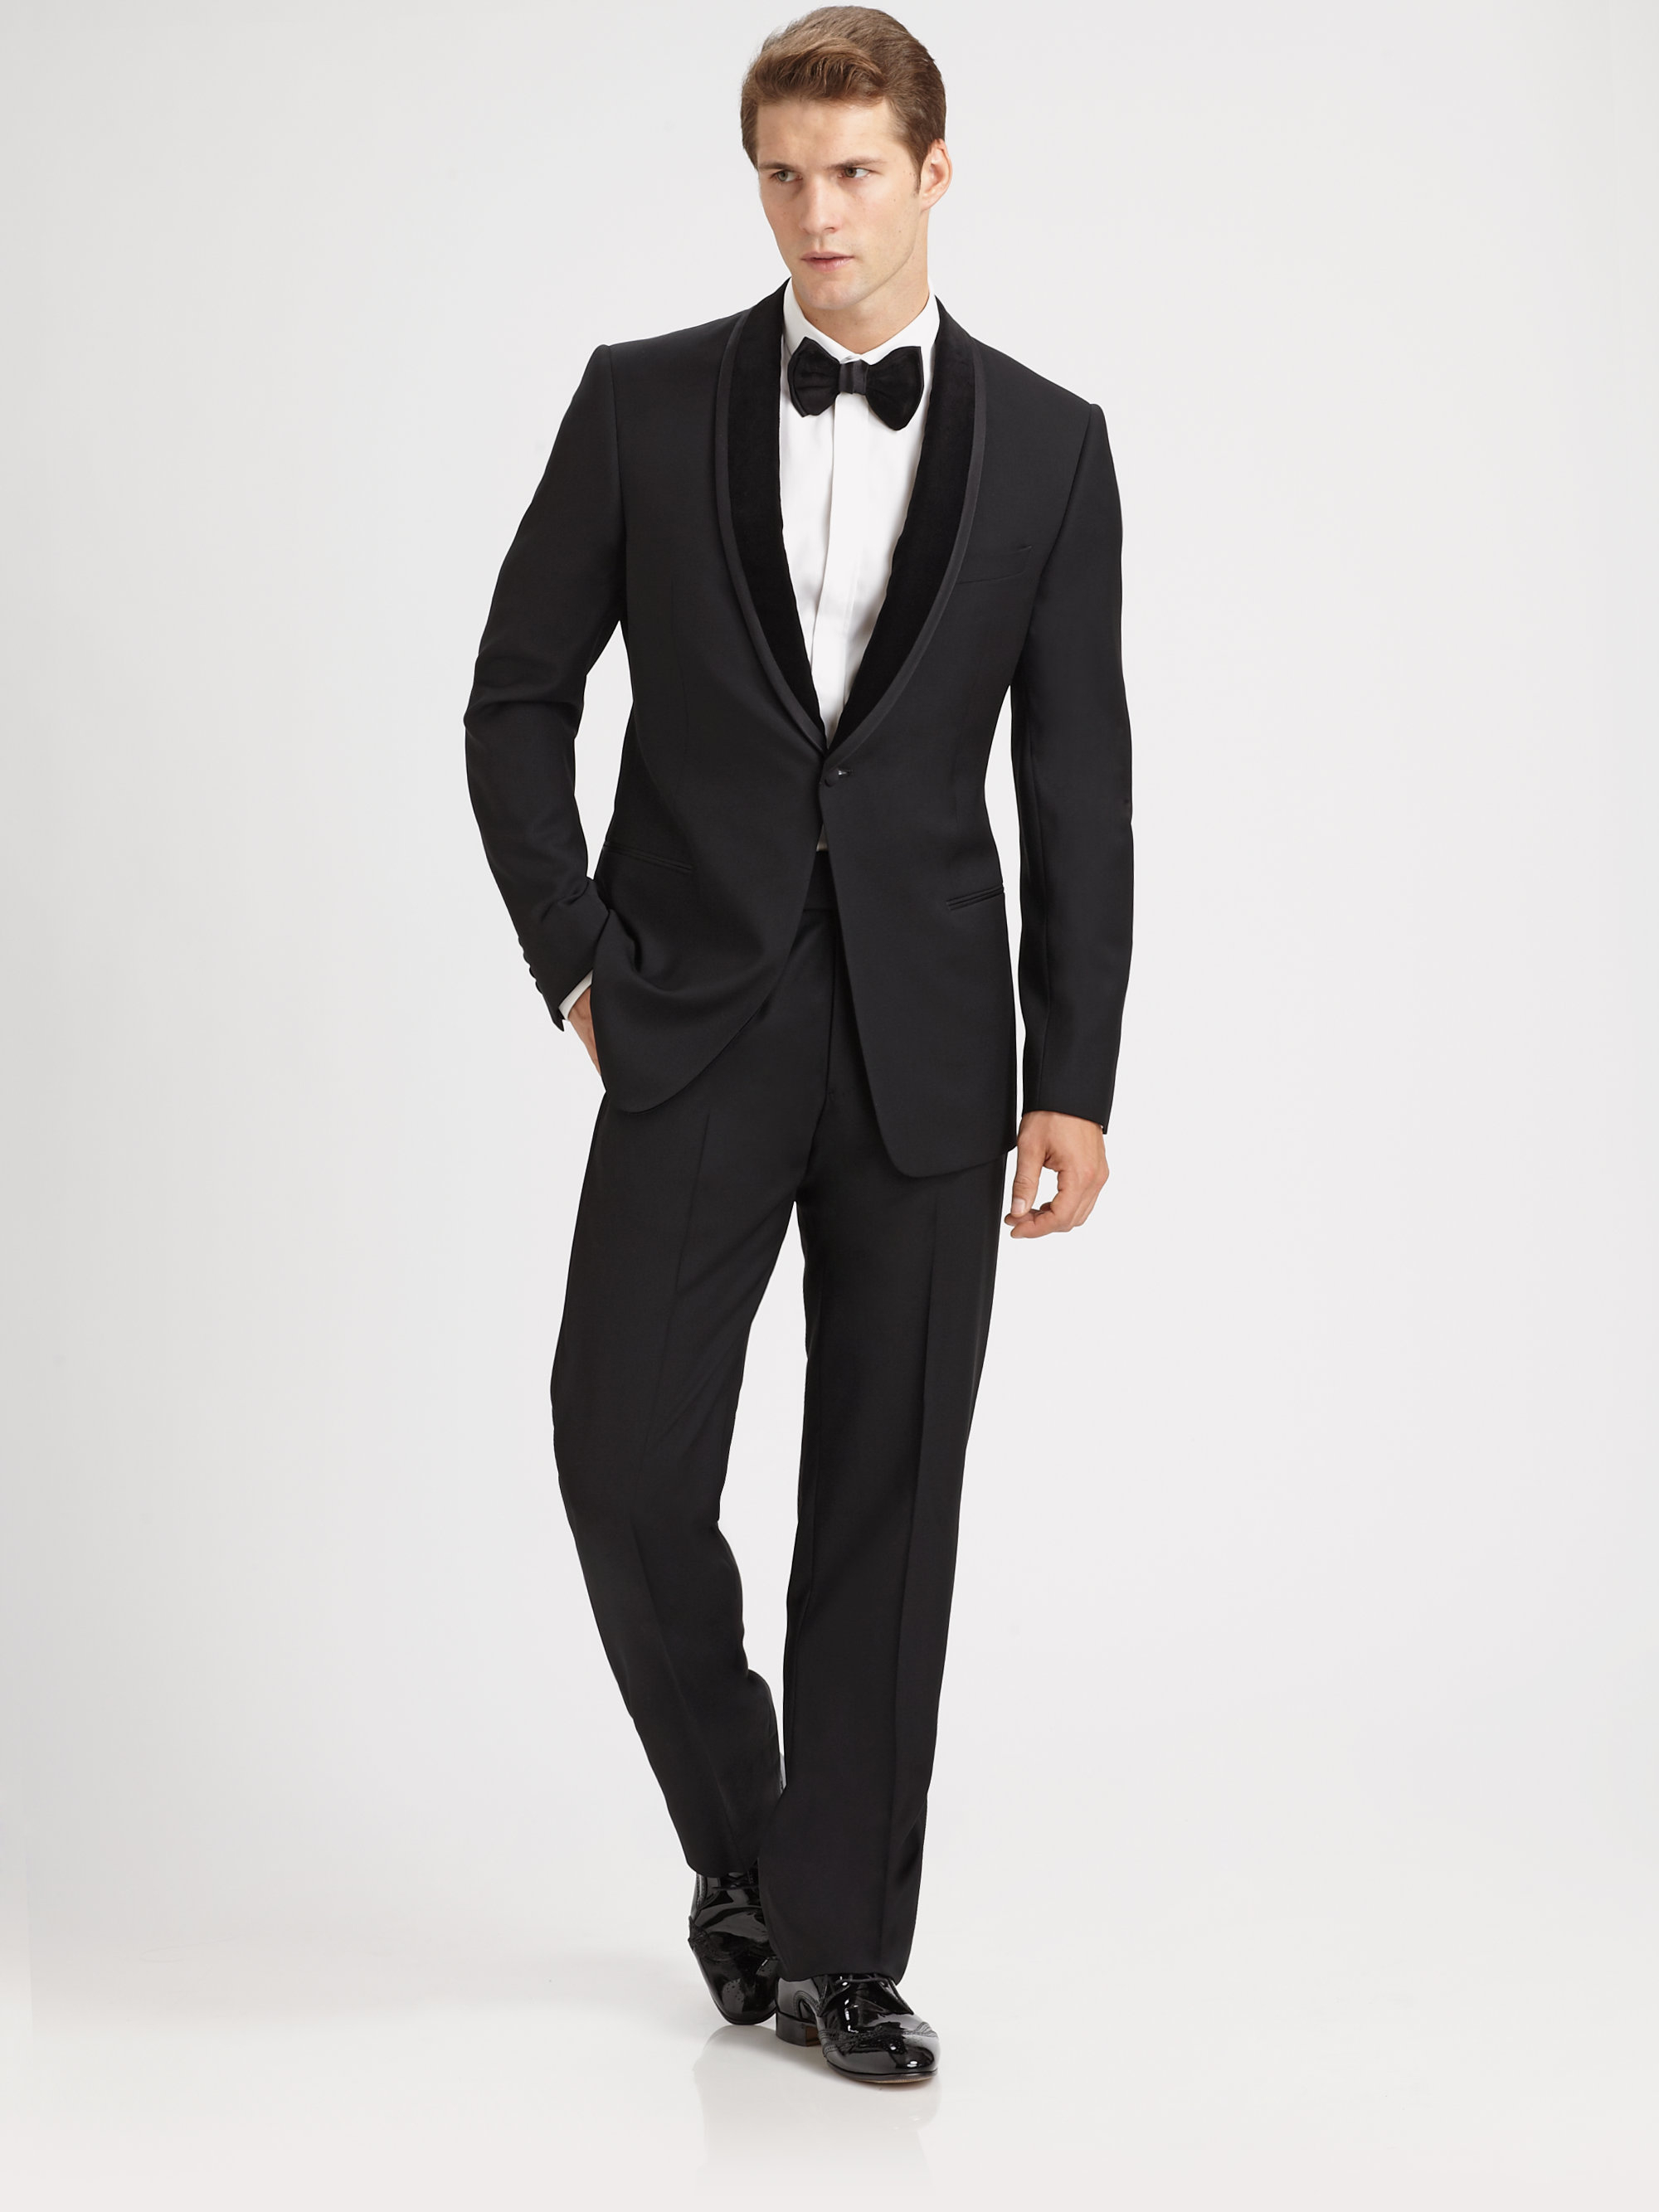 Armani Shawl Collar Tuxedo in Black for Men - Lyst